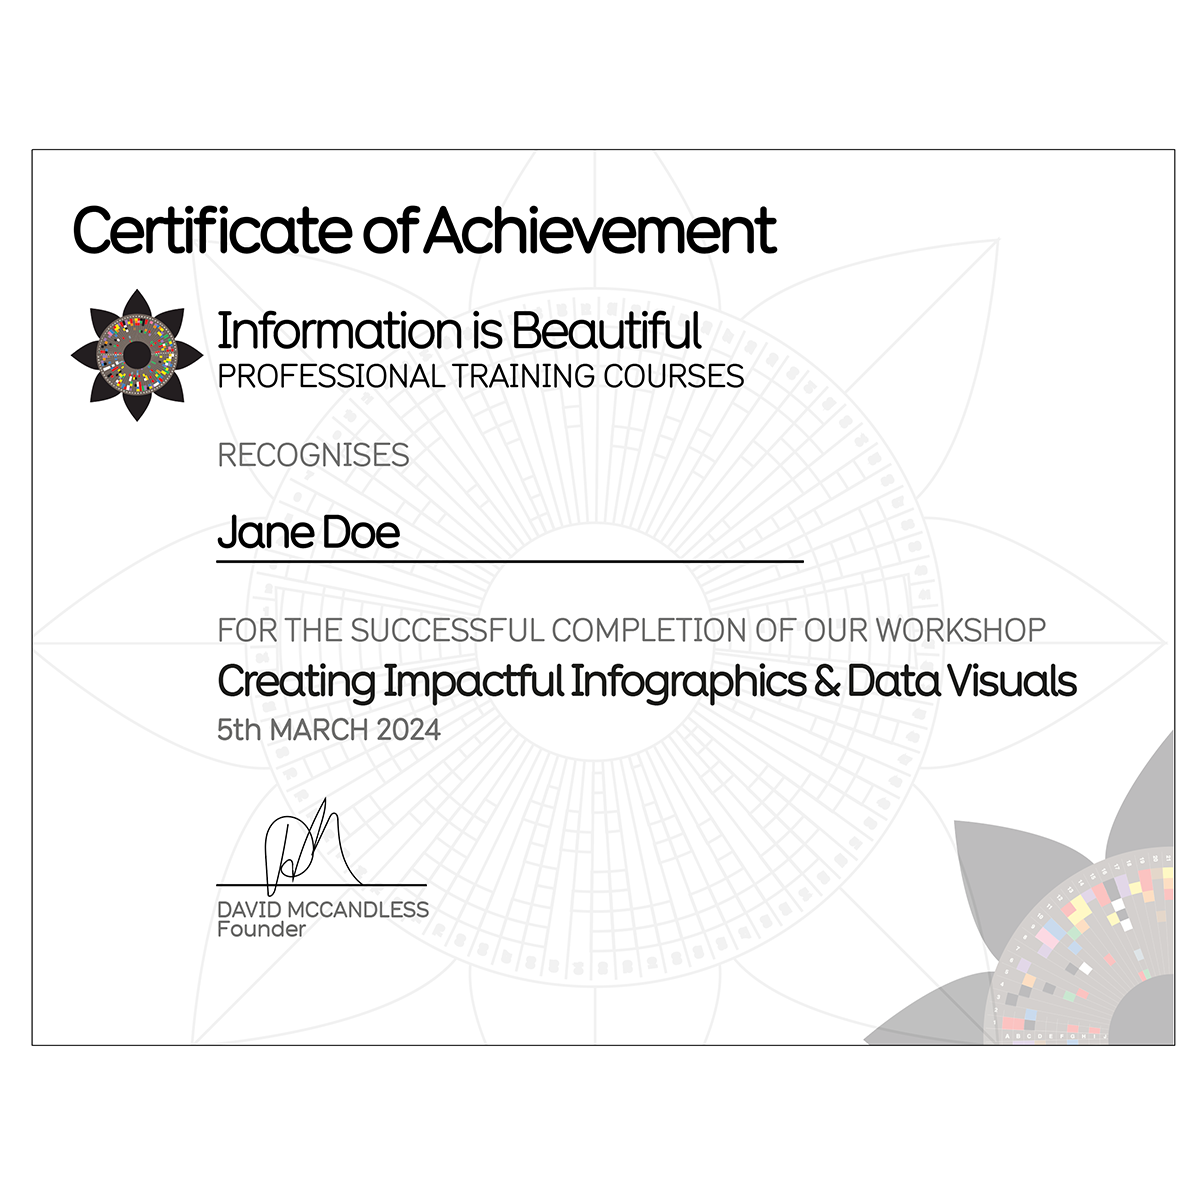 Information is Beautiful Workshop - Certificate of Achievement